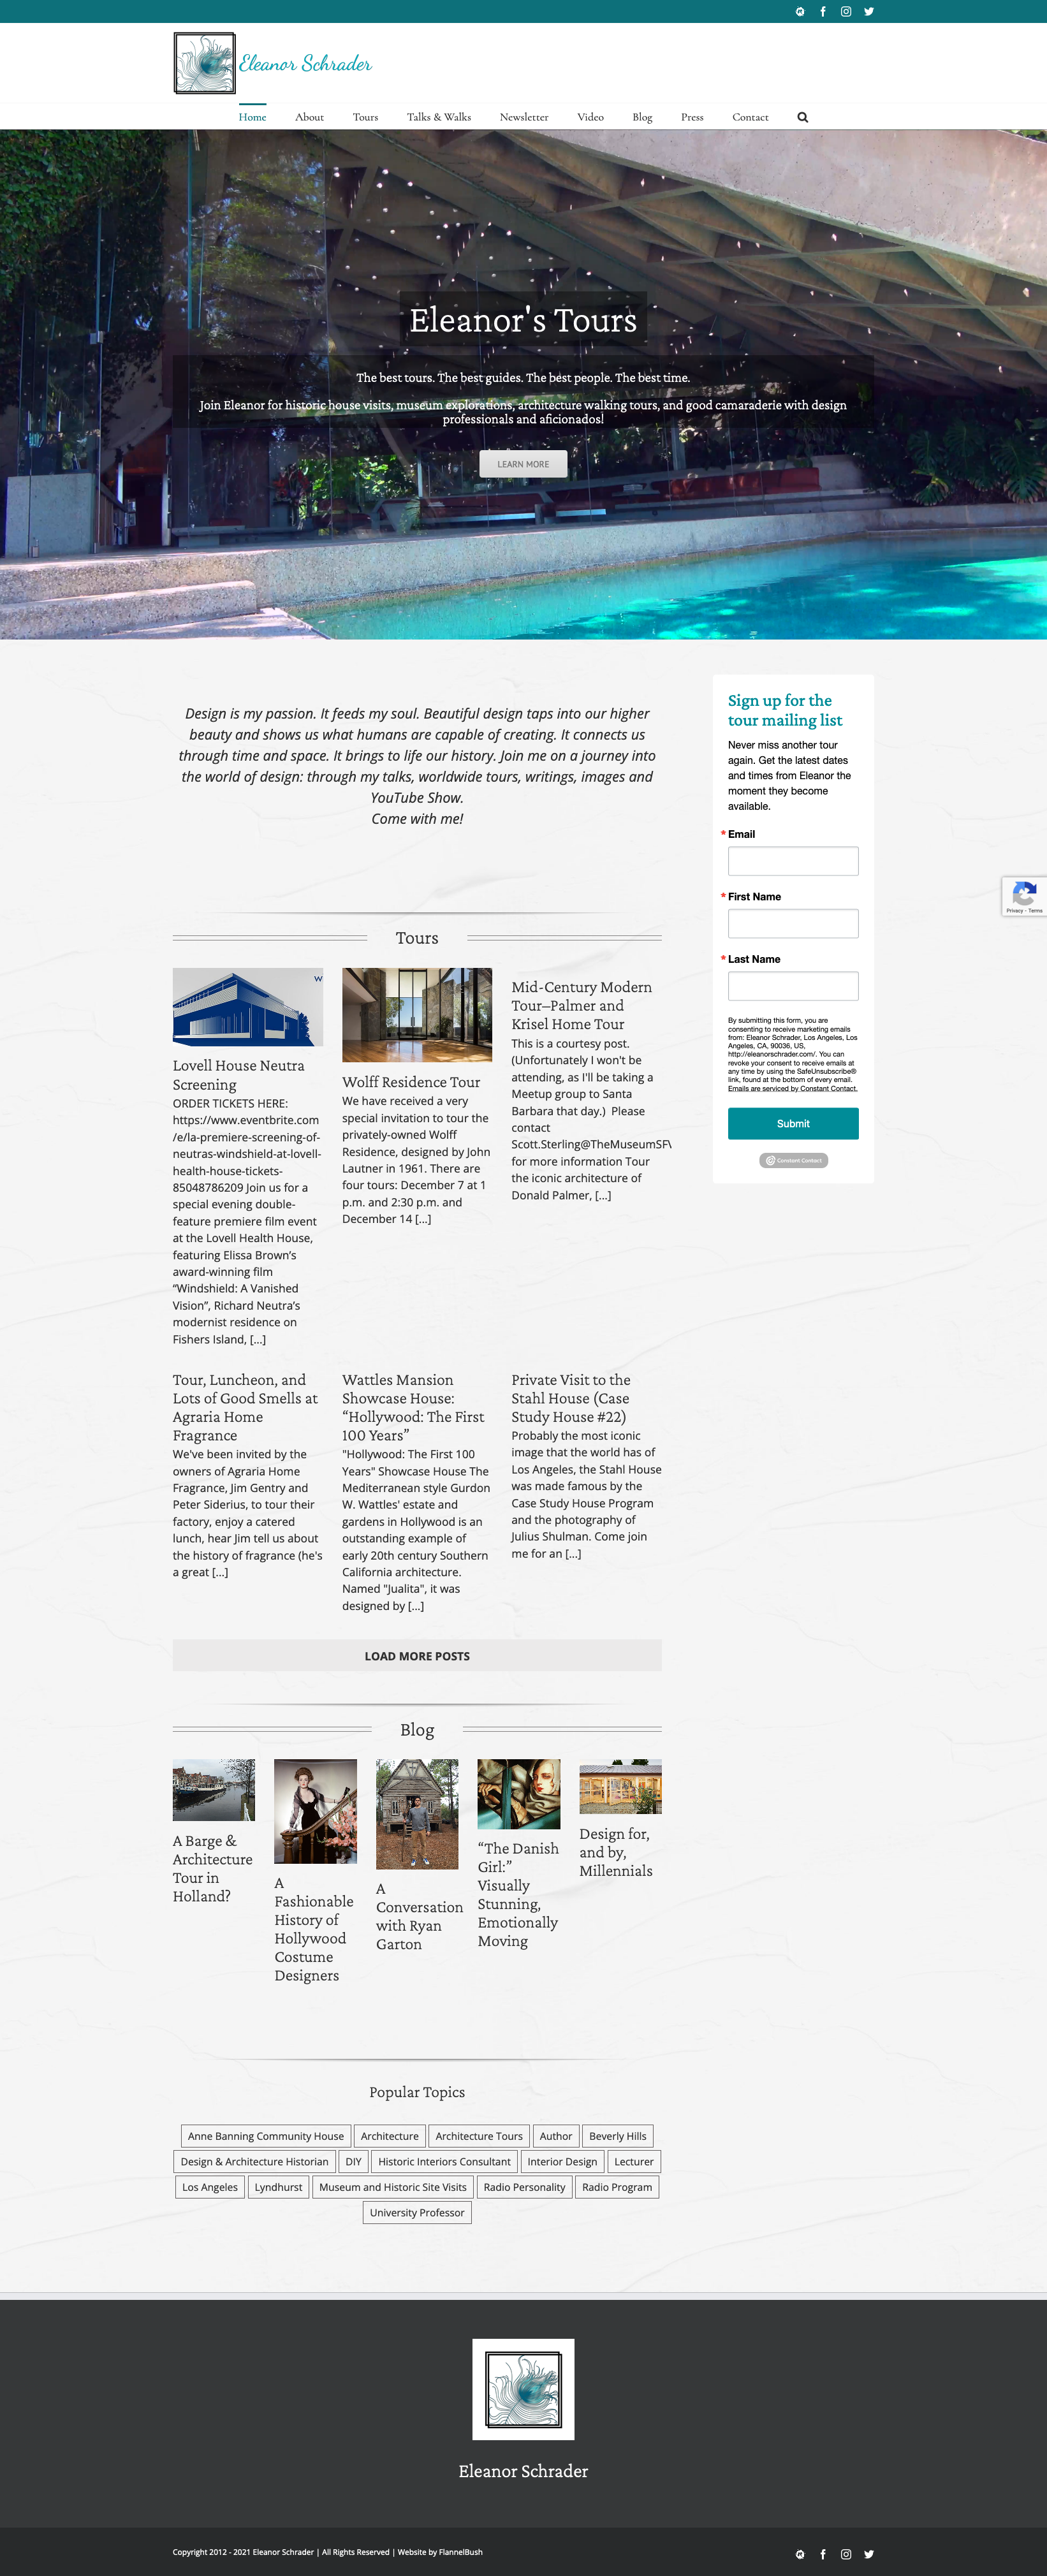 Eleanor Schrader's Website for LA Tours & Architecture